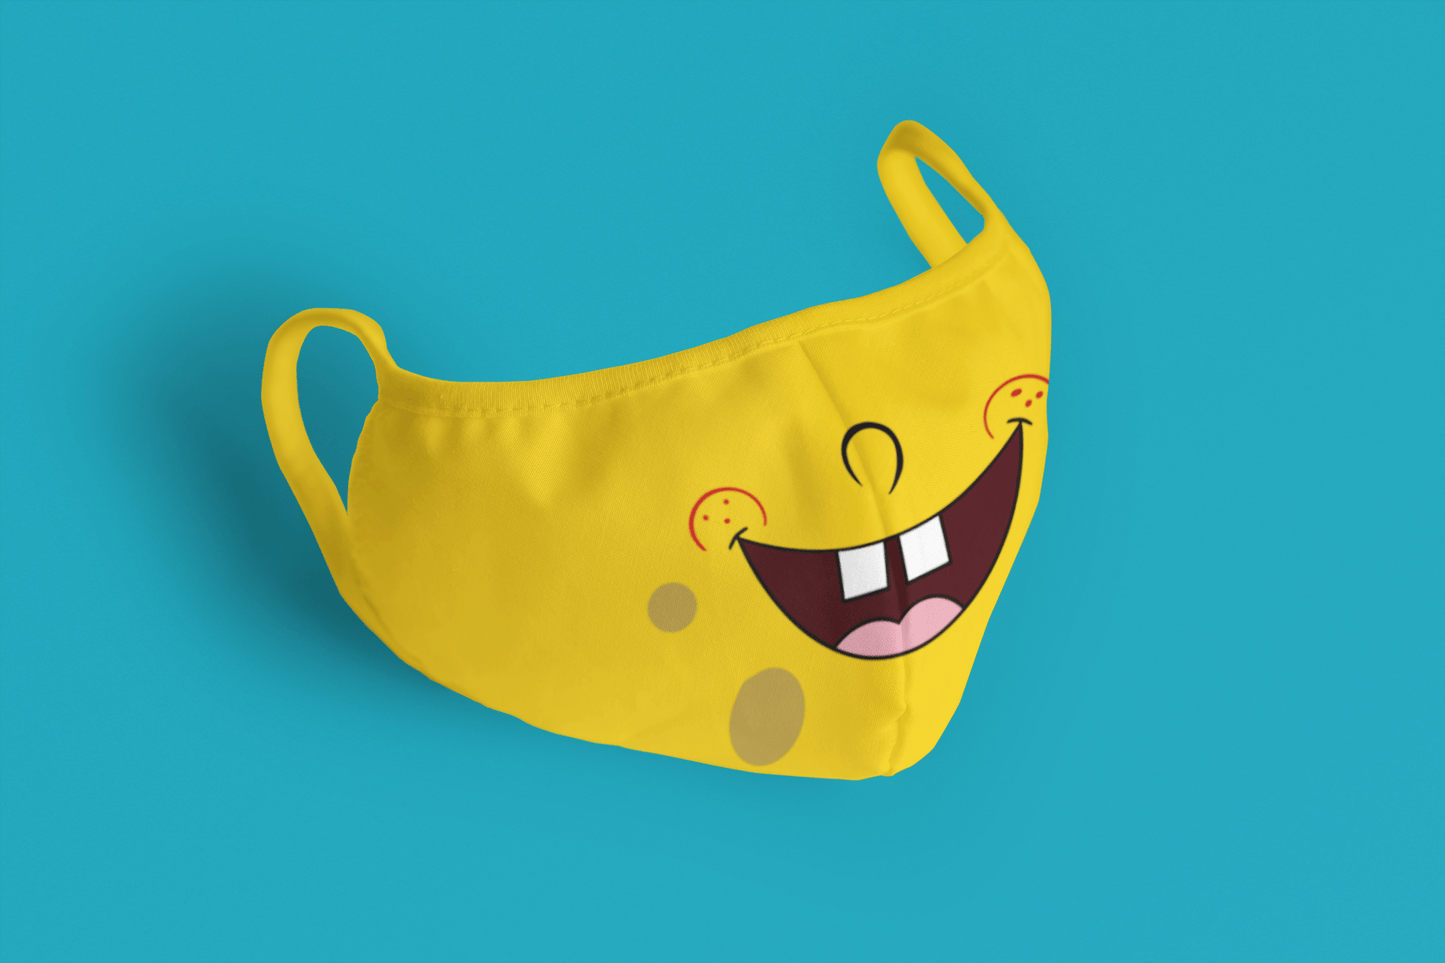 SpongeBob: Printed Tetra Shield Protection Mask